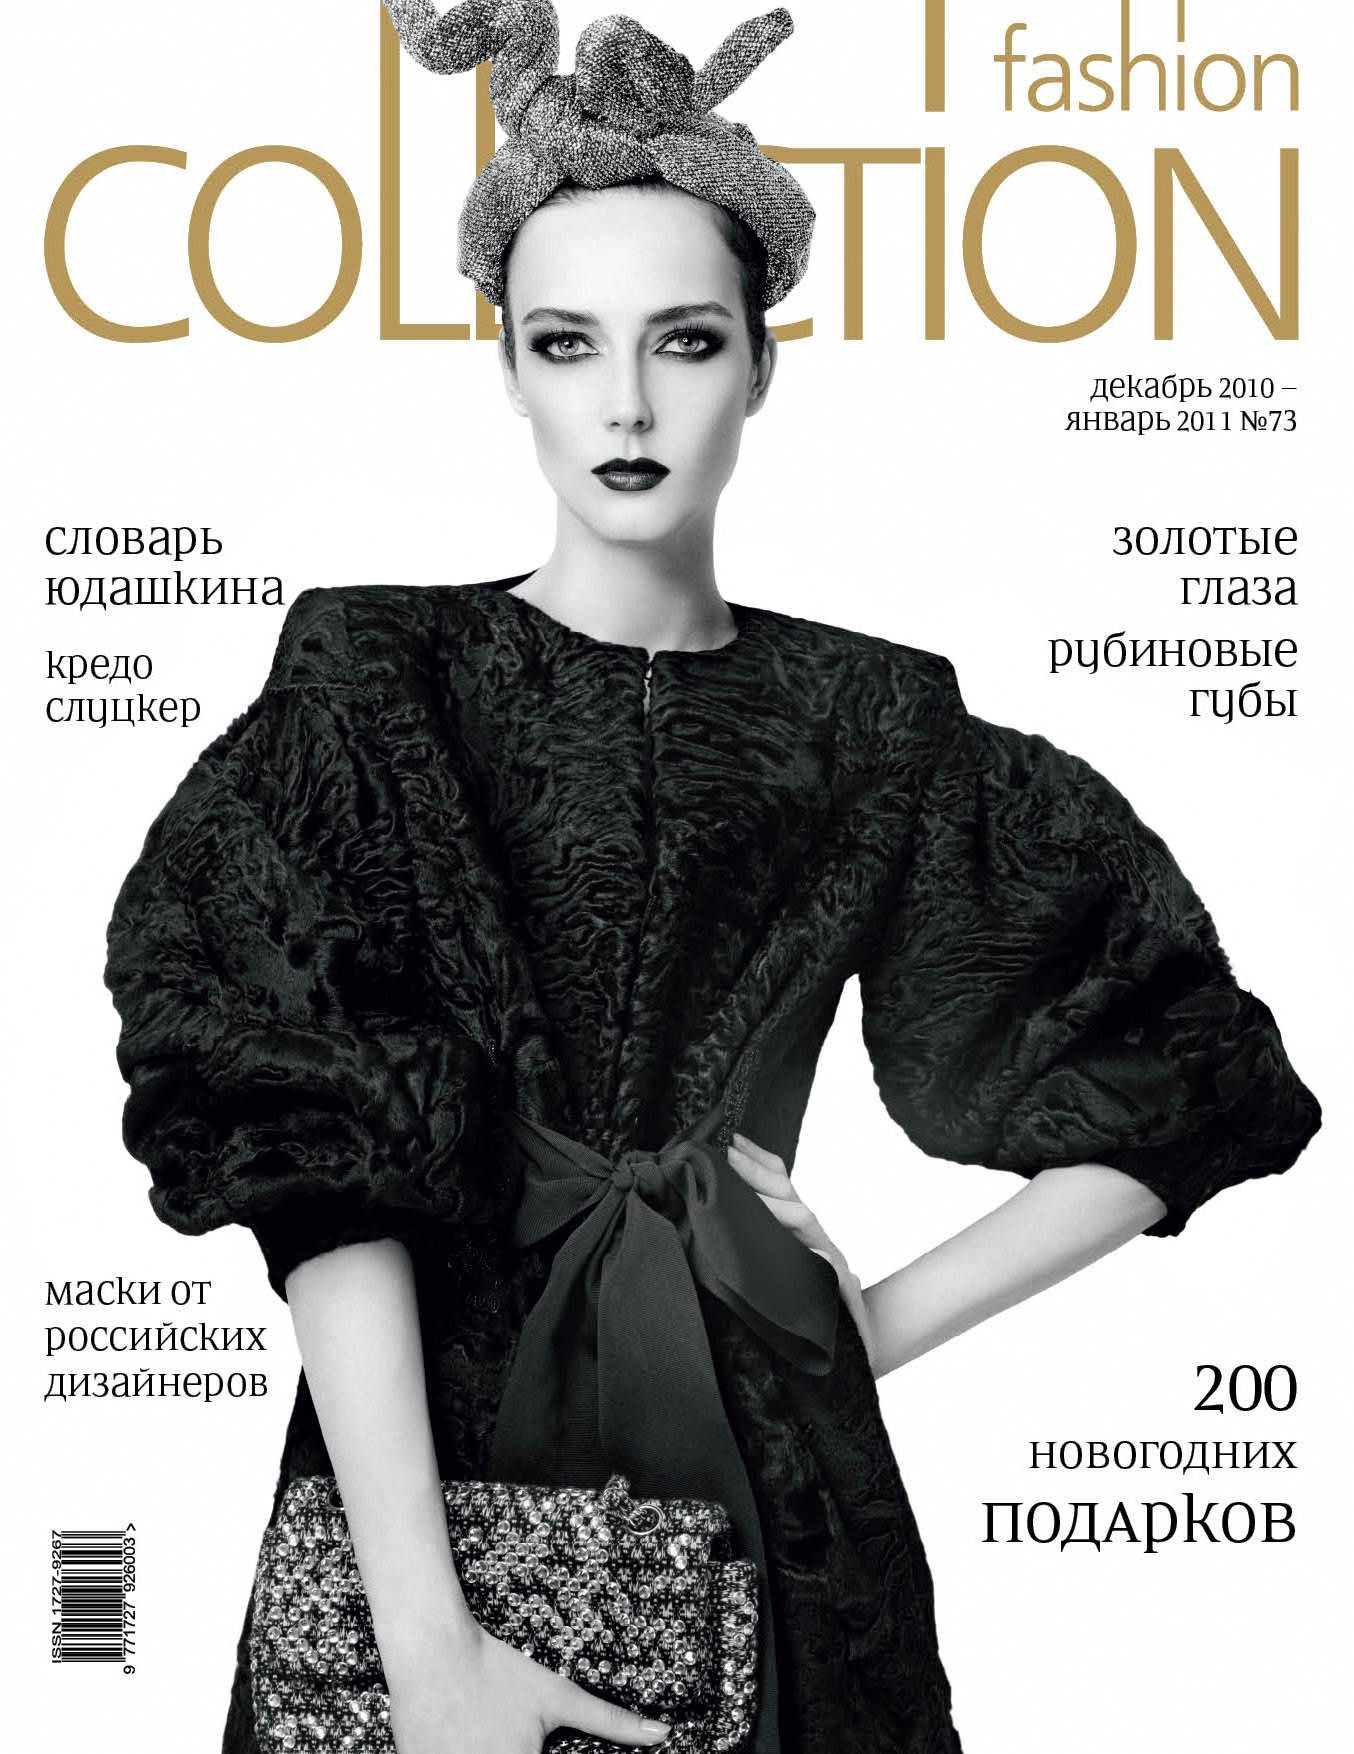 Collection журнал. Модные журналы. Фэшн коллекшн. Журнал Fashion collection. Глянцевые журналы фэшн.